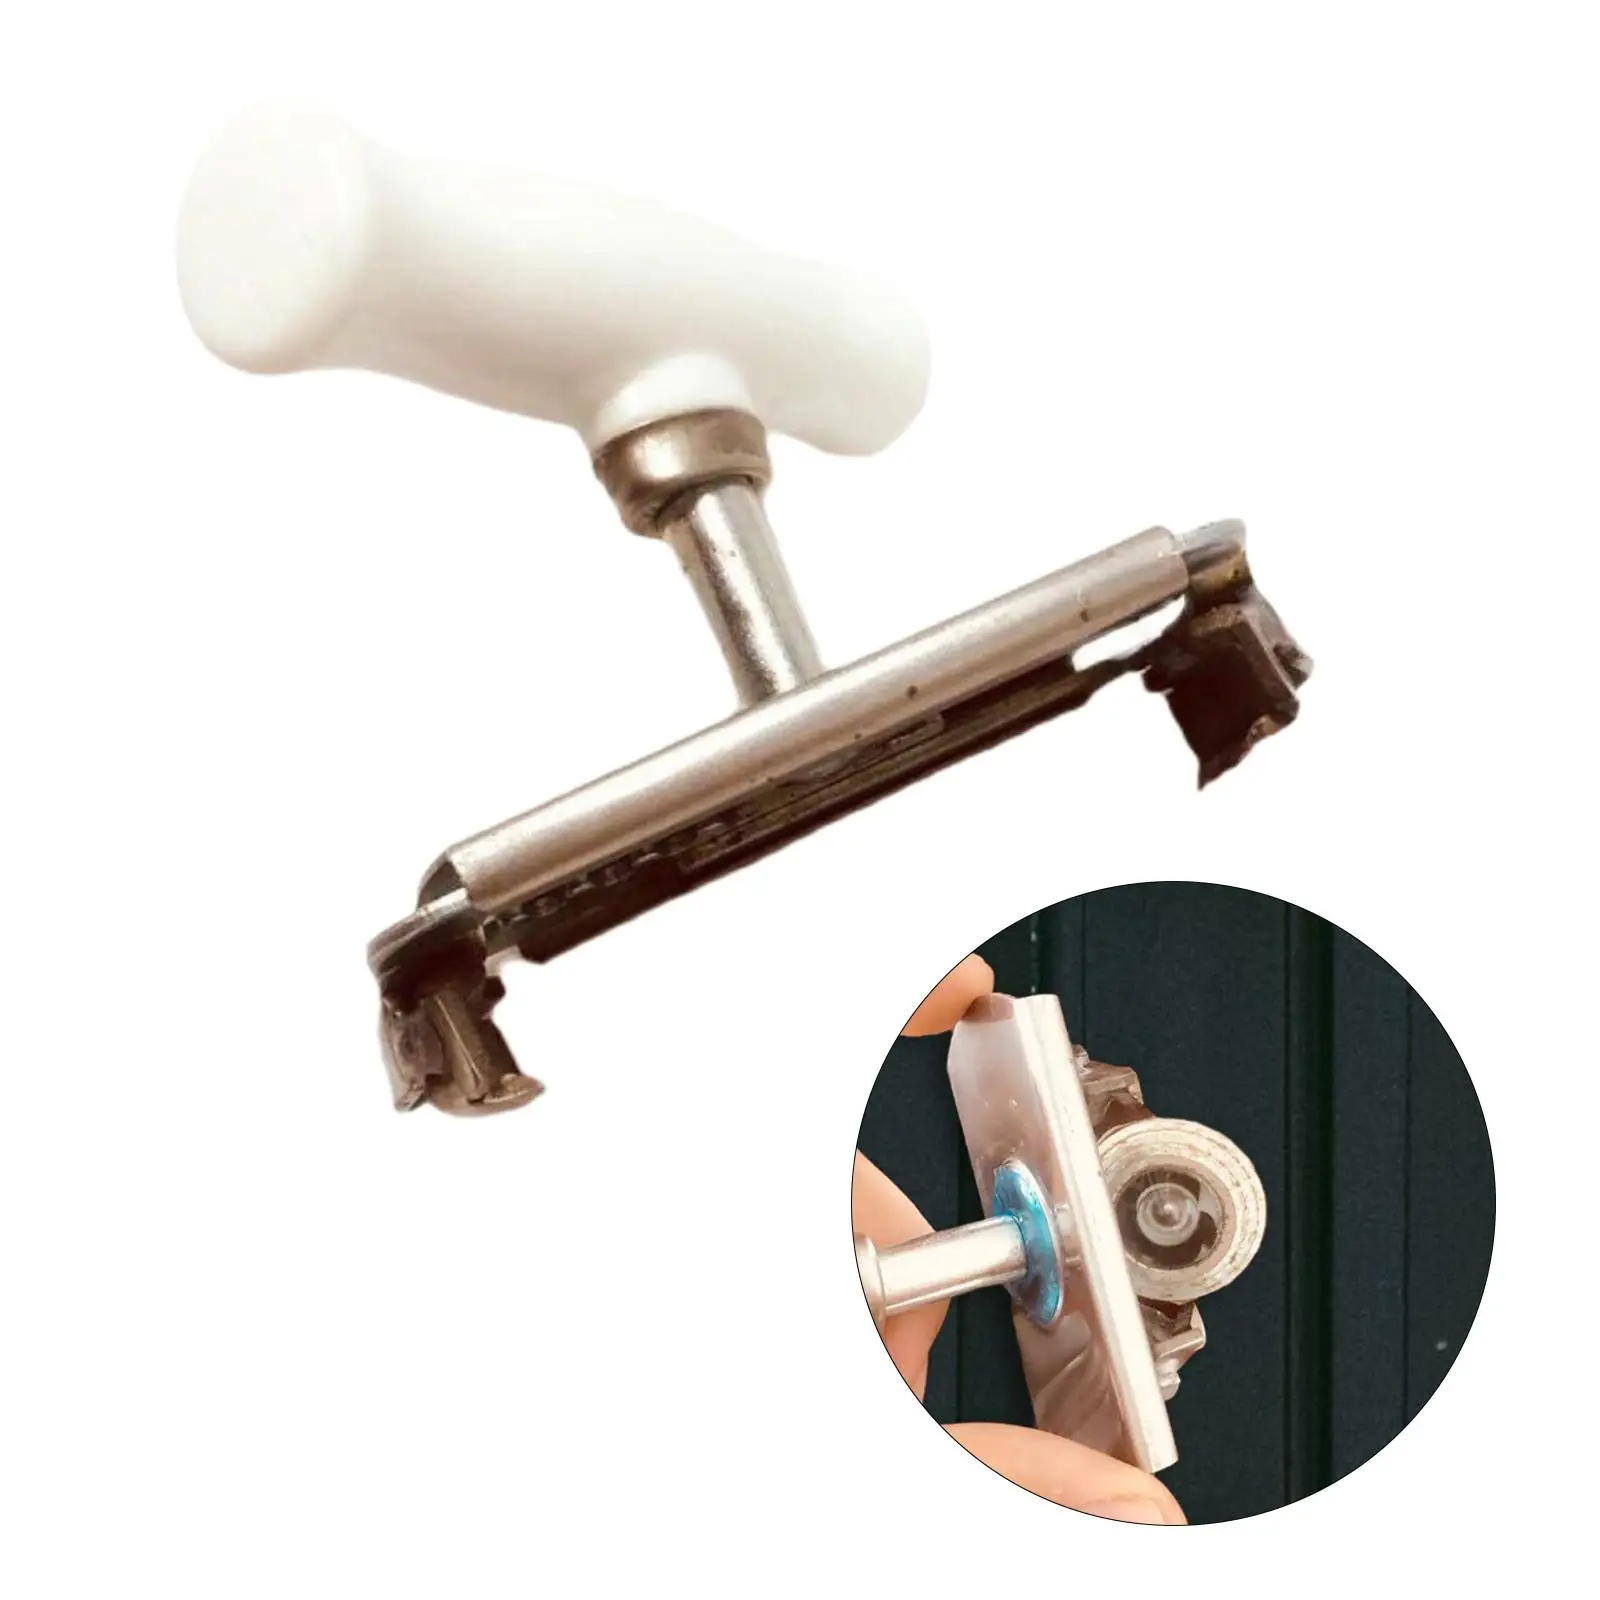 Adjustable Peephole Remover Premium Repair Locks Hook Extractor for Outdoor Training